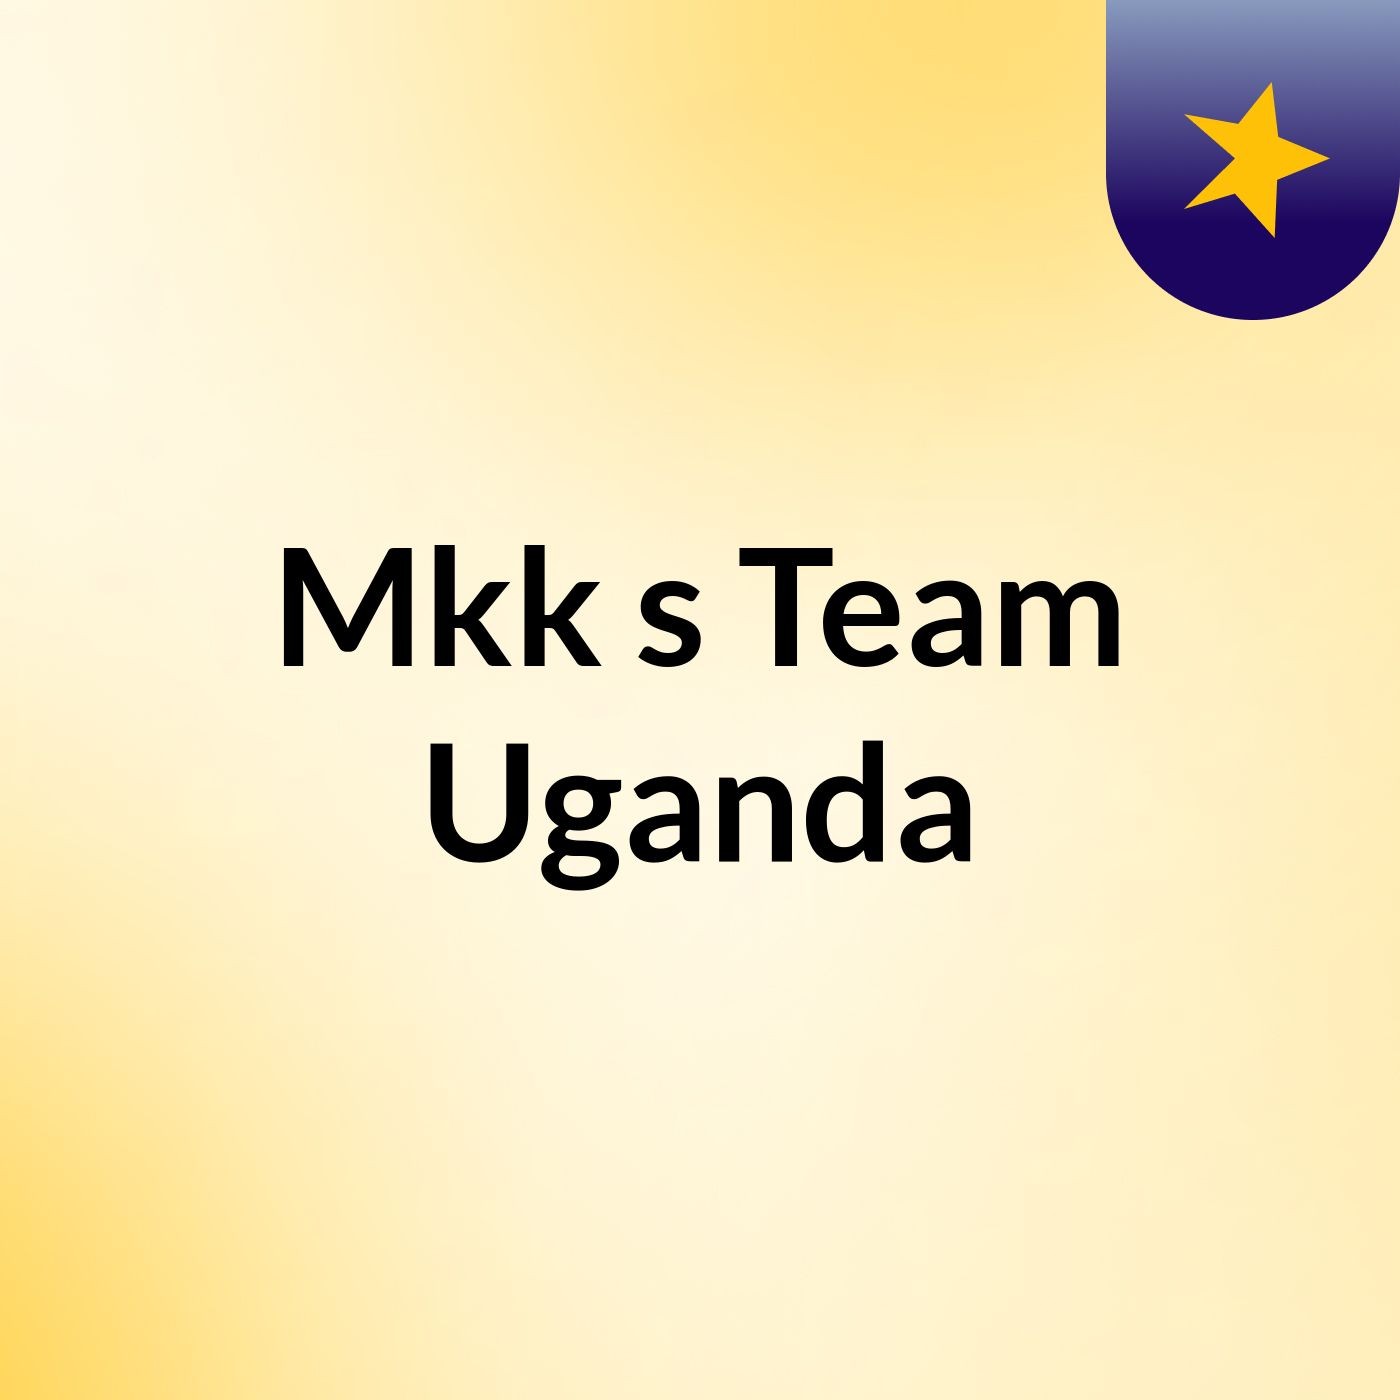 Mkk's Team Uganda